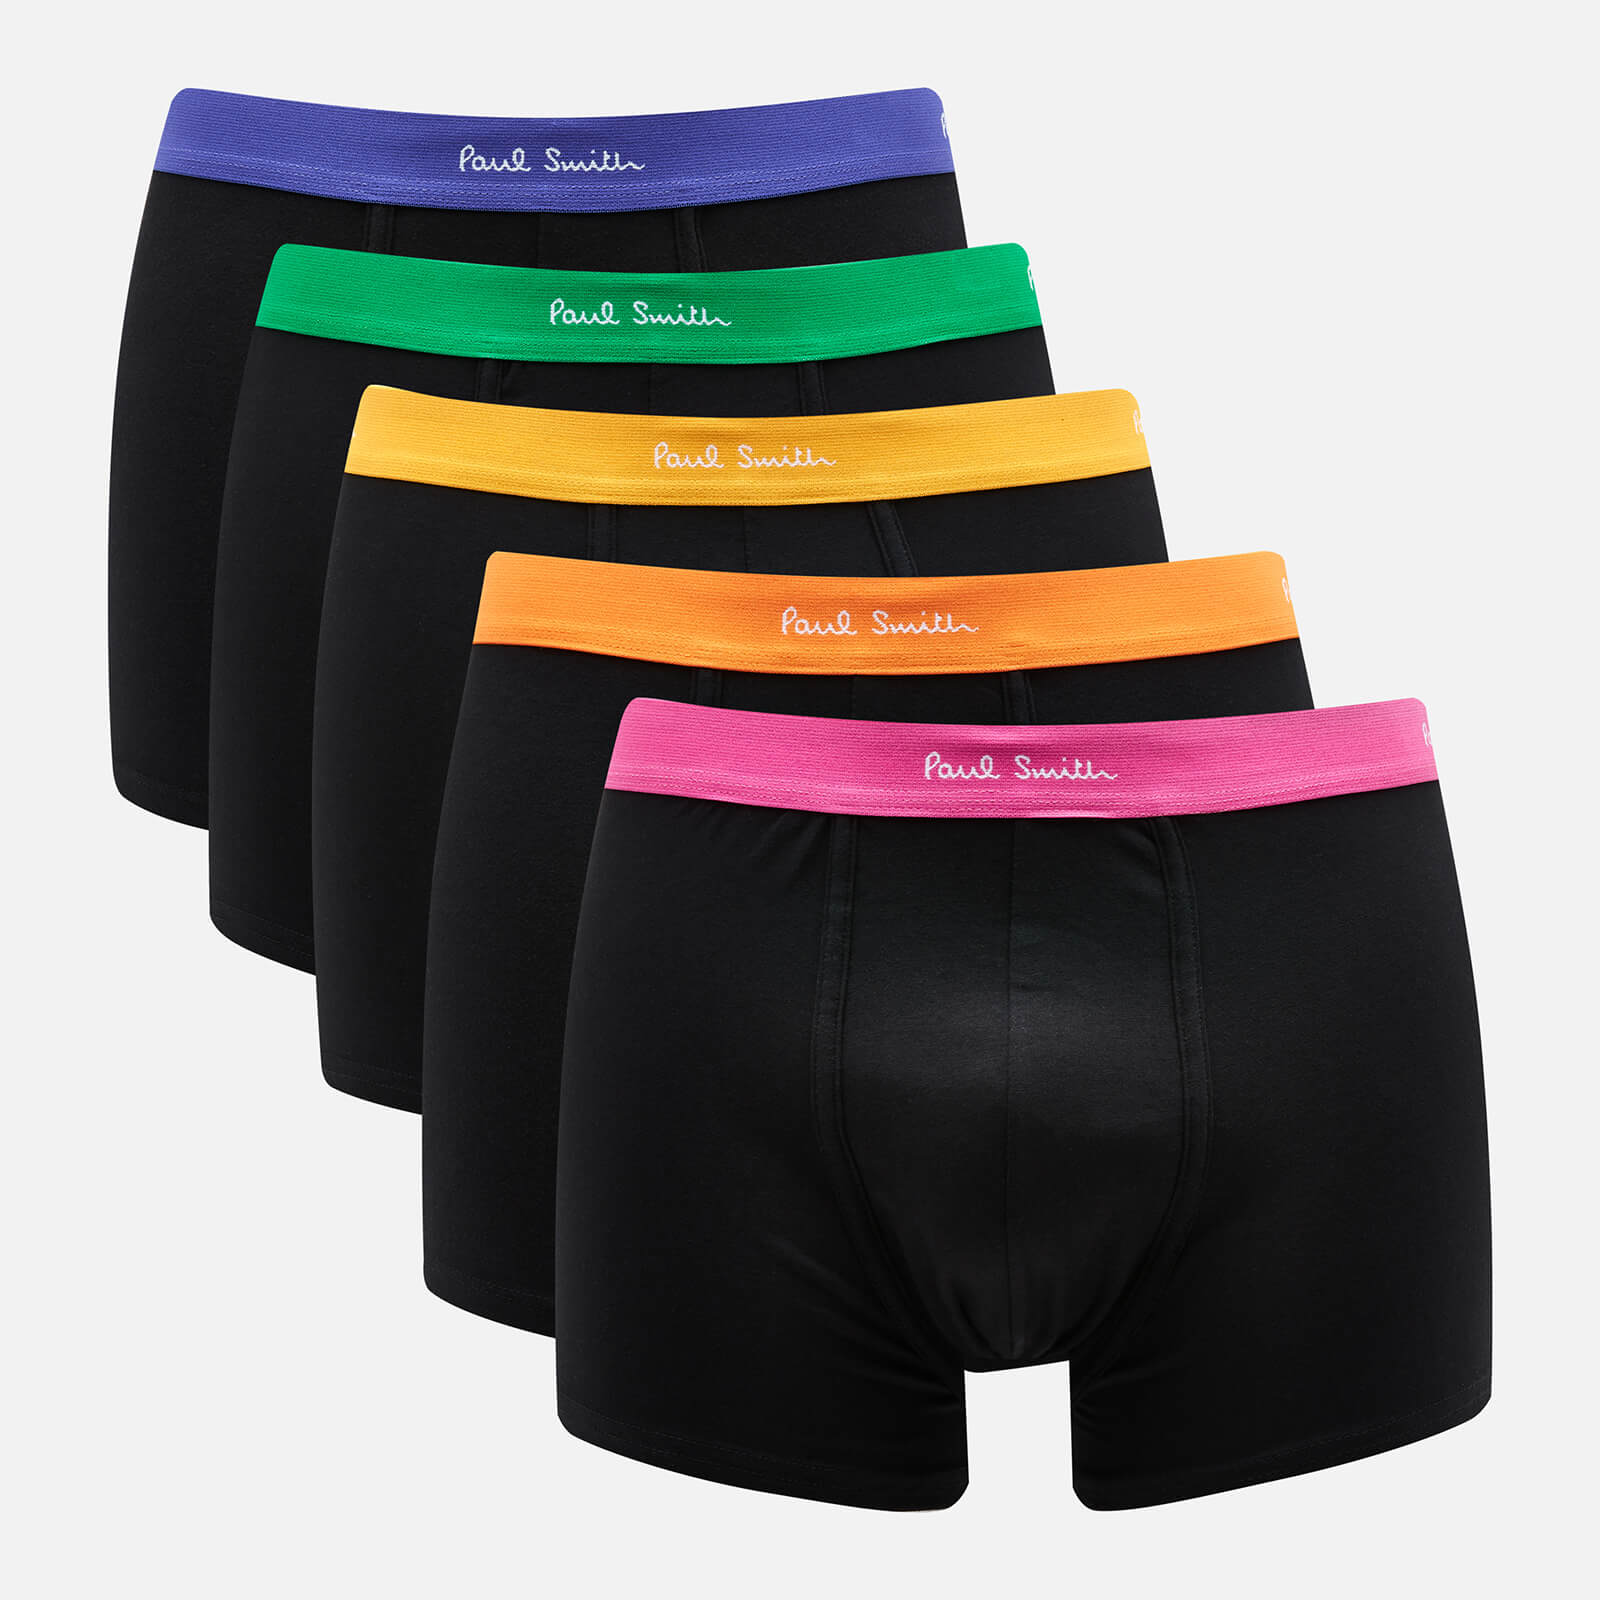 PS Paul Smith Men's 5-Pack Trunk Boxer Shorts - Black/Multi - XL